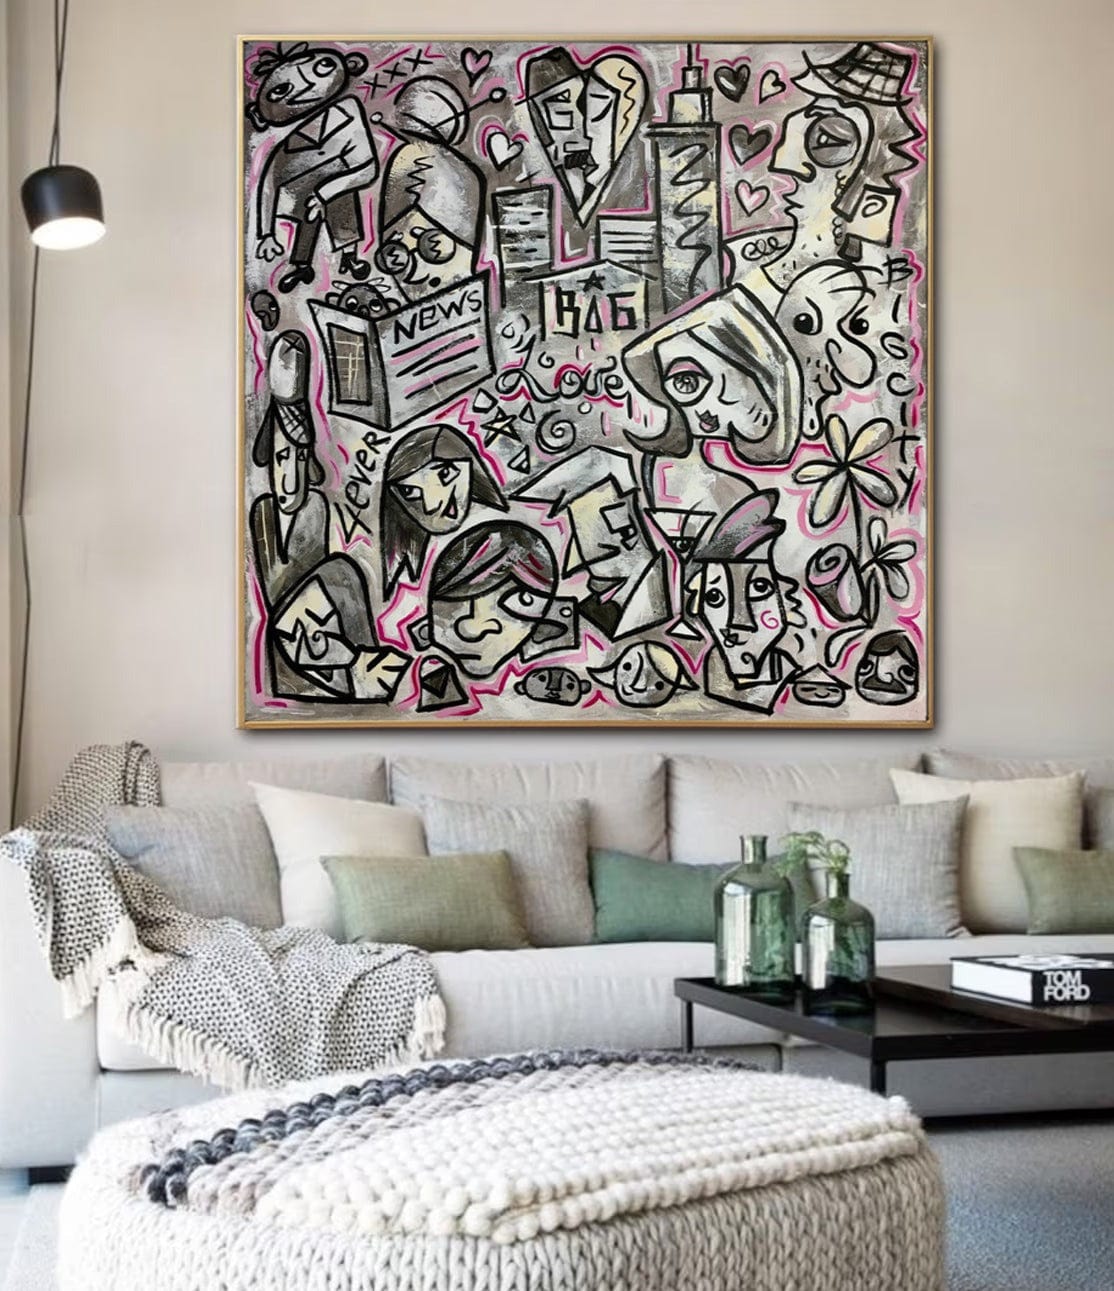 Jeff Koons - Artwork: Backyard: inkjet on canvas.